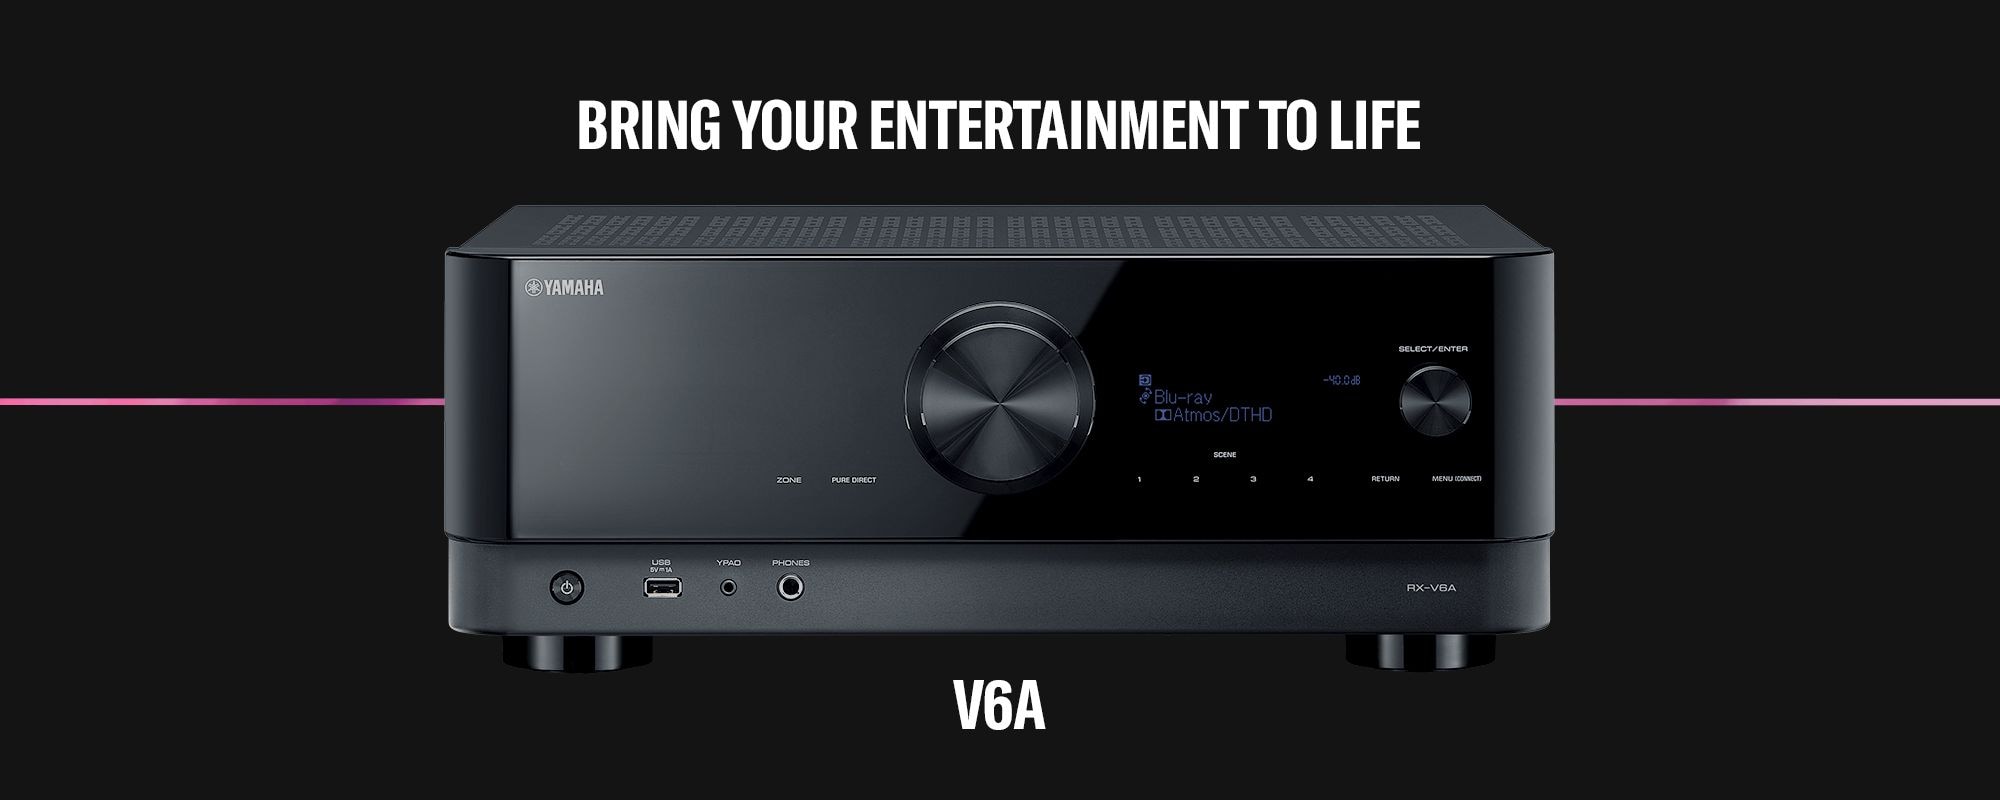 Yamaha RX-V6A V6A Receiver Amp BRING YOUR ENTERTAINMENT TO LIFE